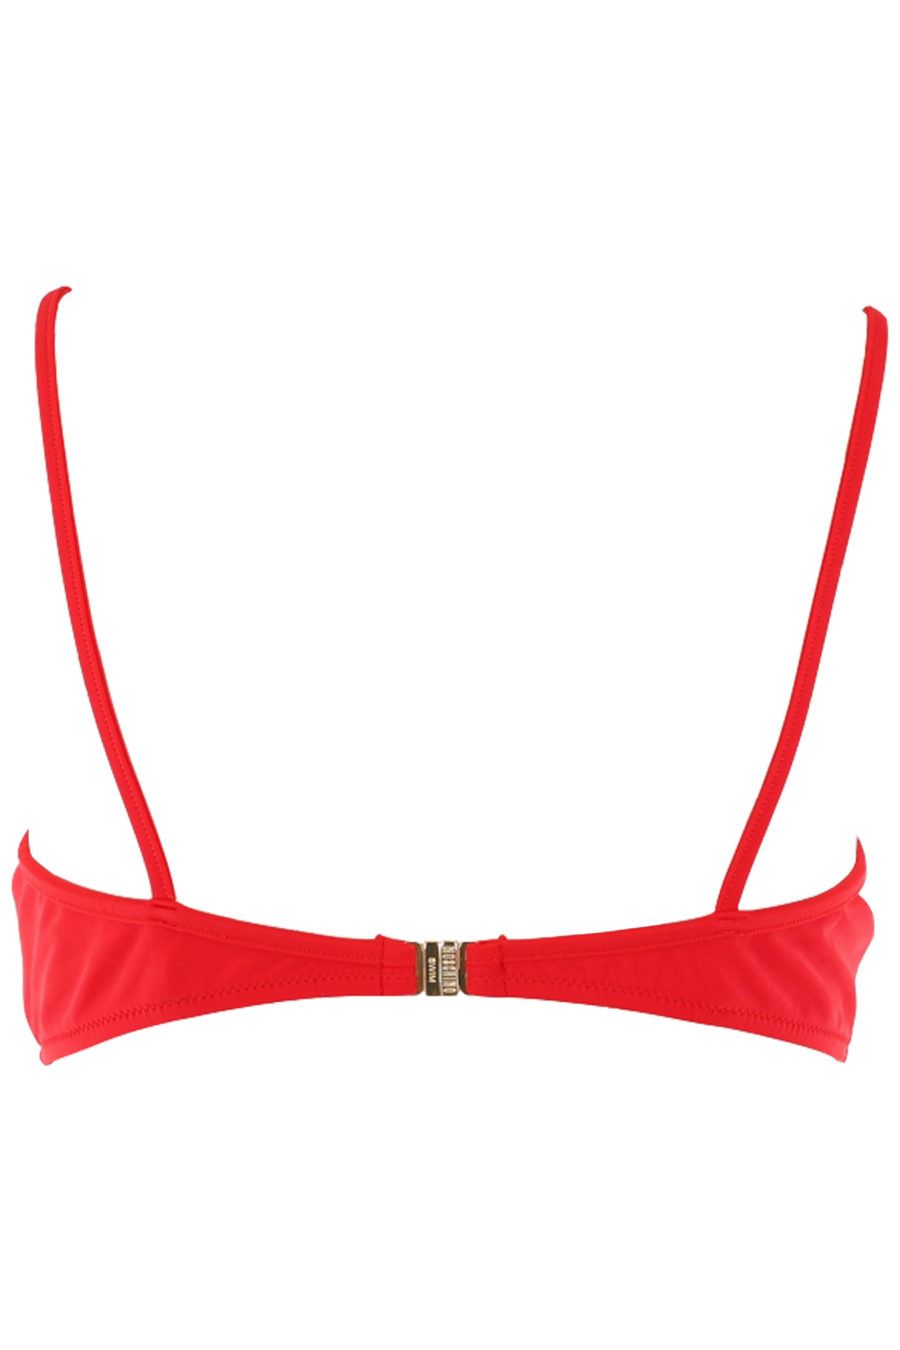 Top de bikini recto rojo con logo doble pregunta negro - IMG 0767